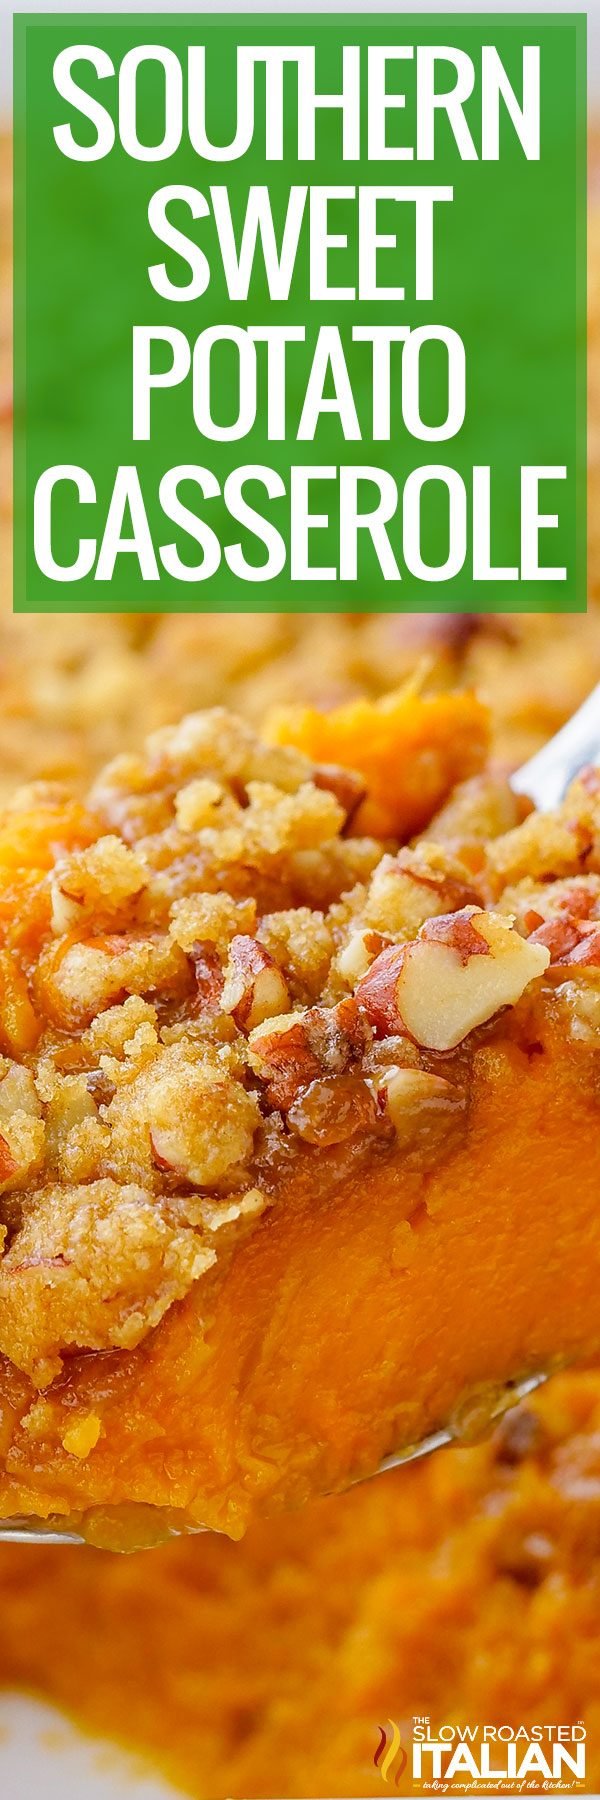 titled image (and shown): sweet potato casserole recipe